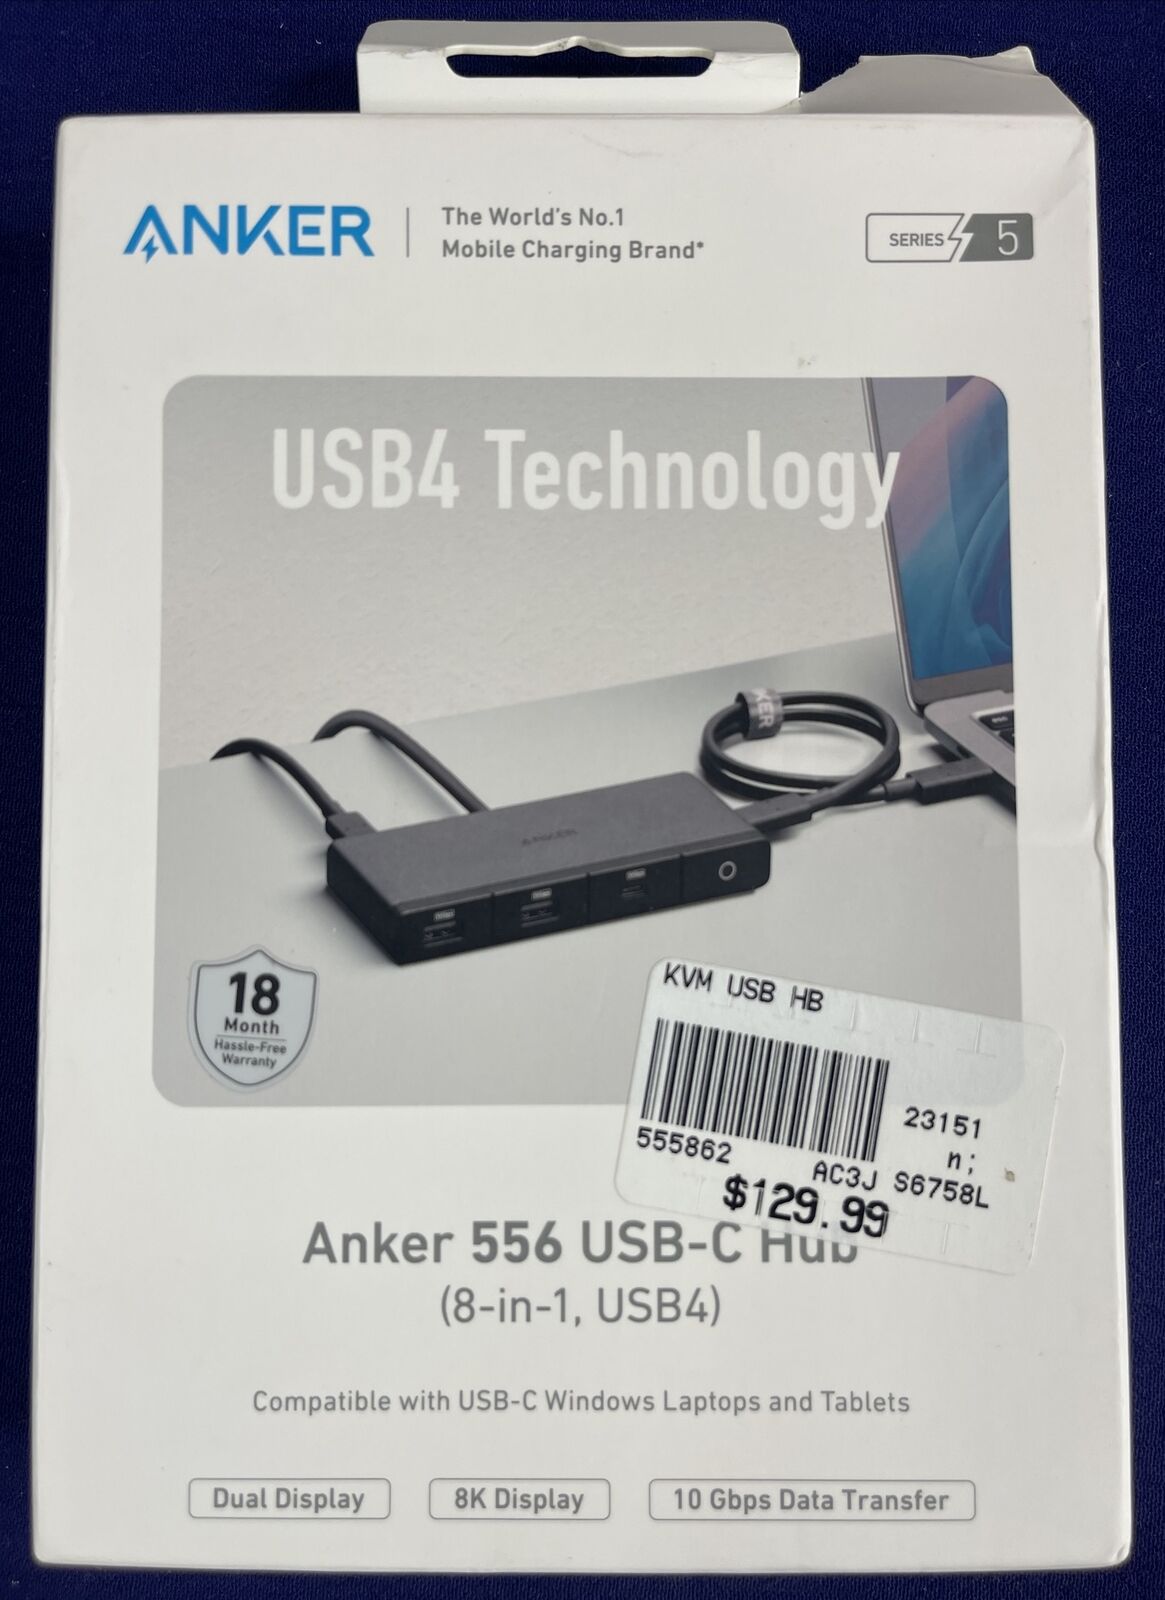 Anker USB4 Technology 556 USB-C 8-in-1 NEW